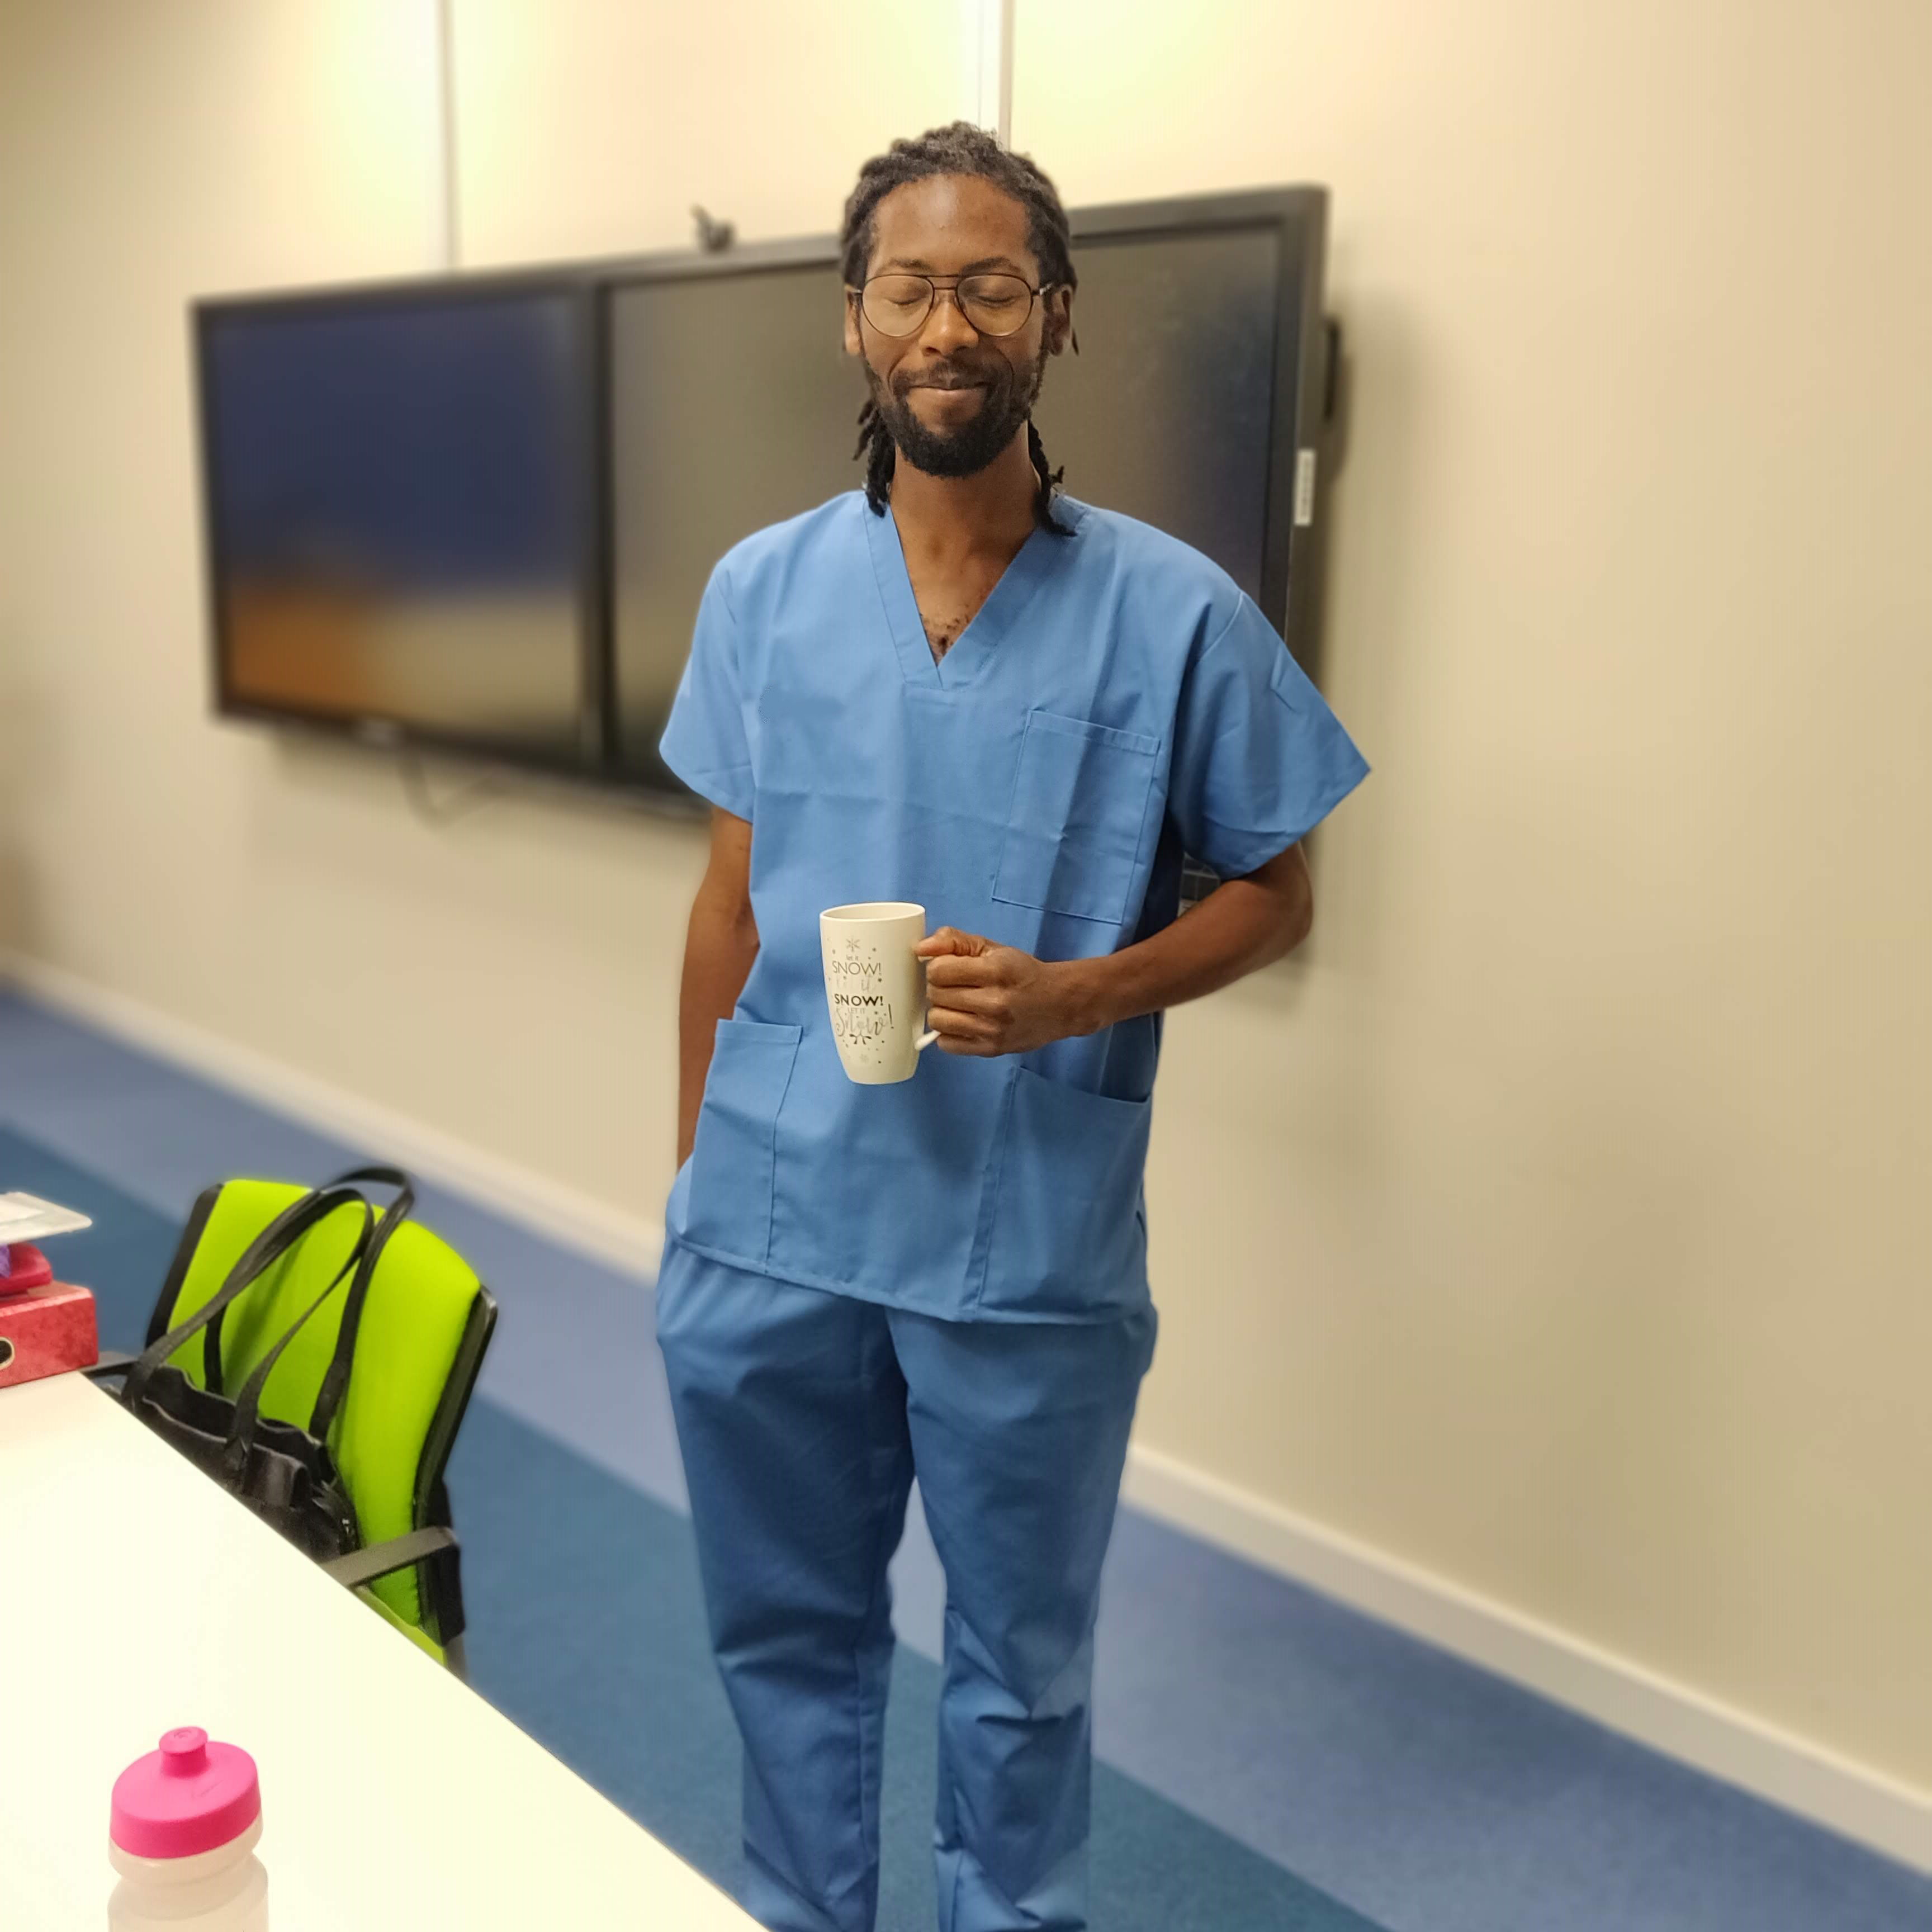 Student Franklin in blue medical scrubs